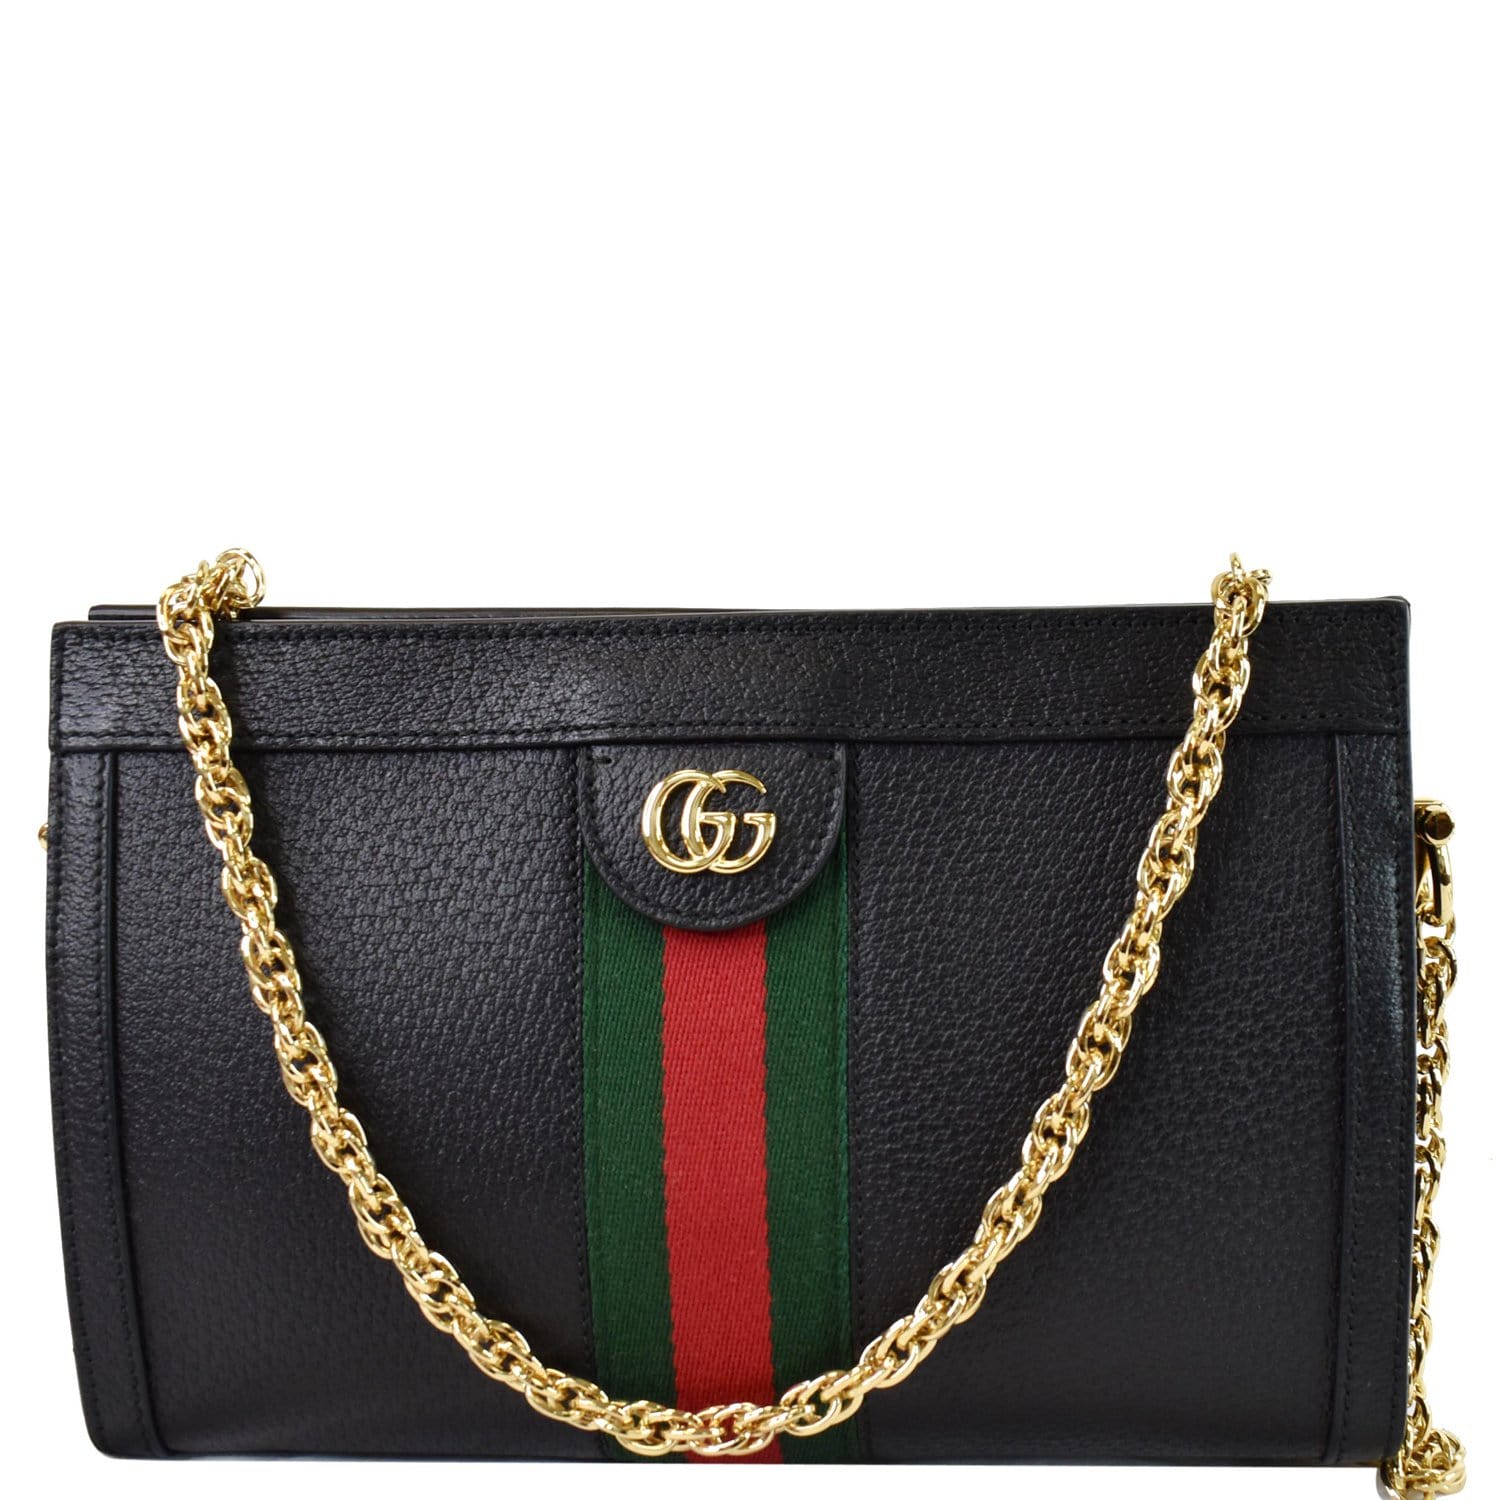 Gucci Women's Bag - Black